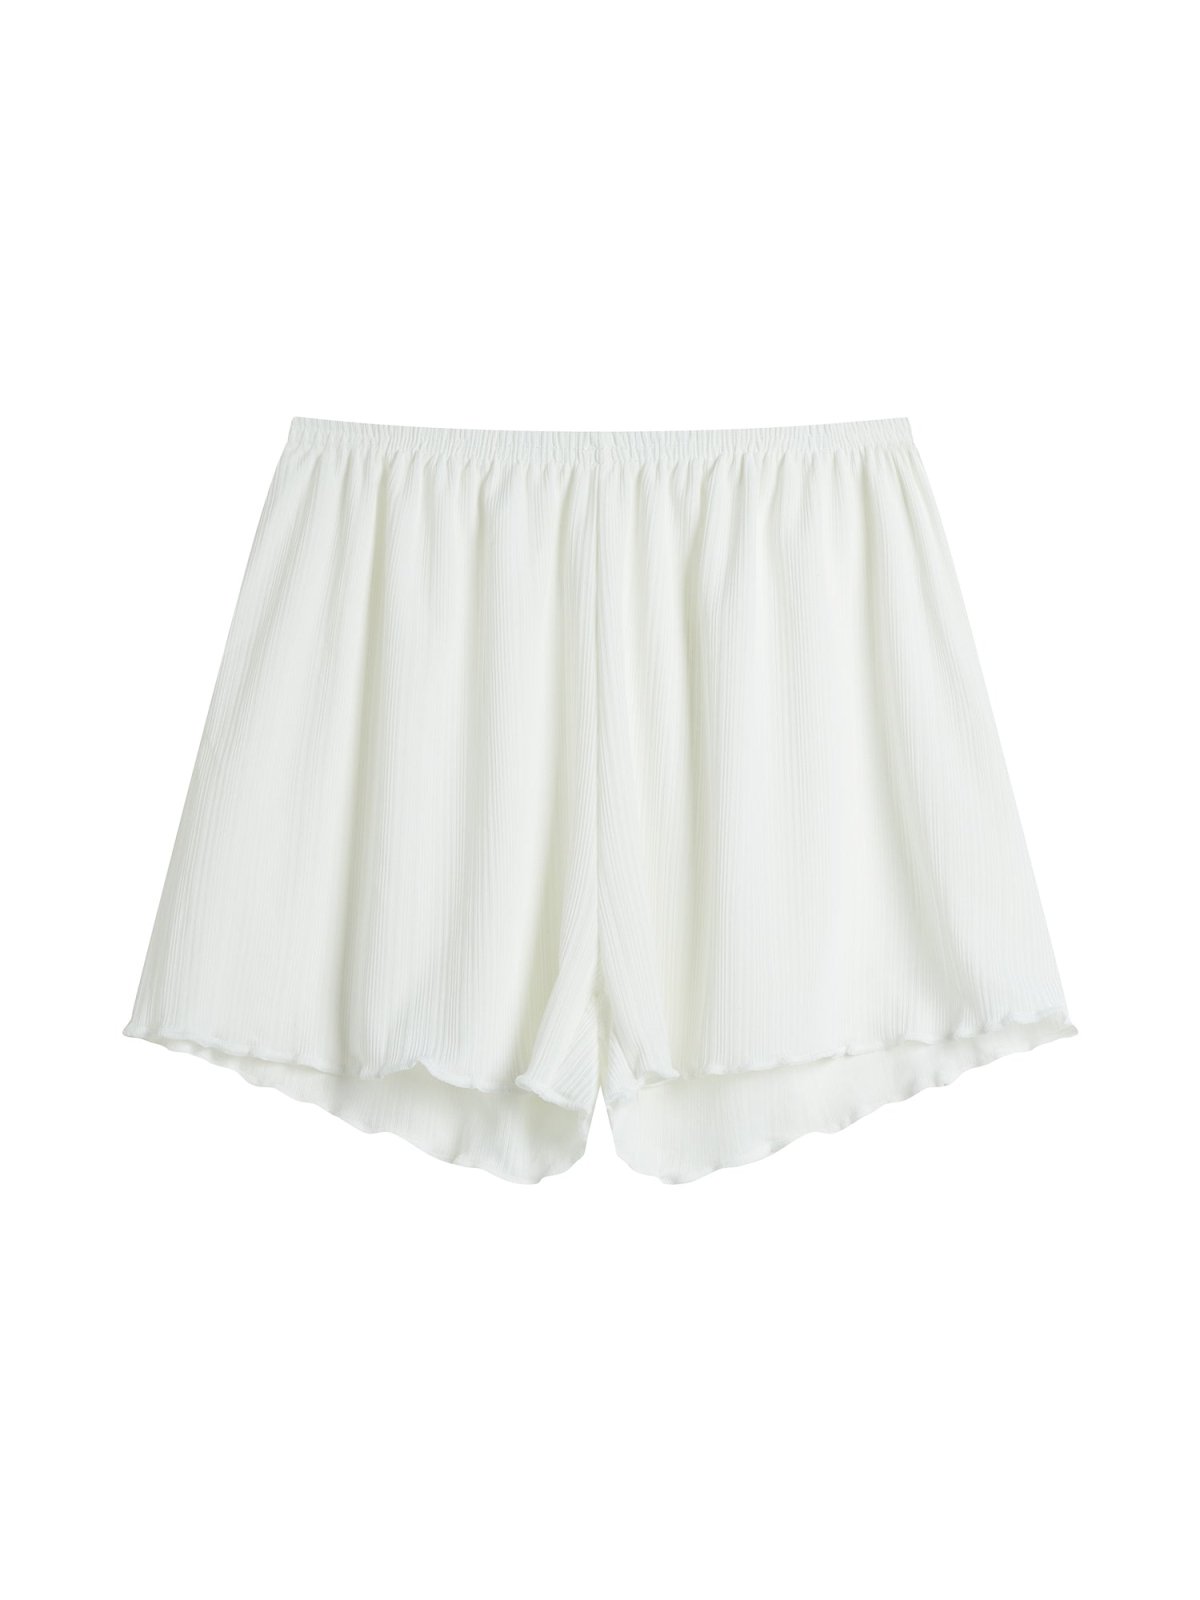 Ribbed Slip Shorts - DAG-8-9585-22MarshmallowWhiteF - Marshmallow White - F - D'ZAGE Designs